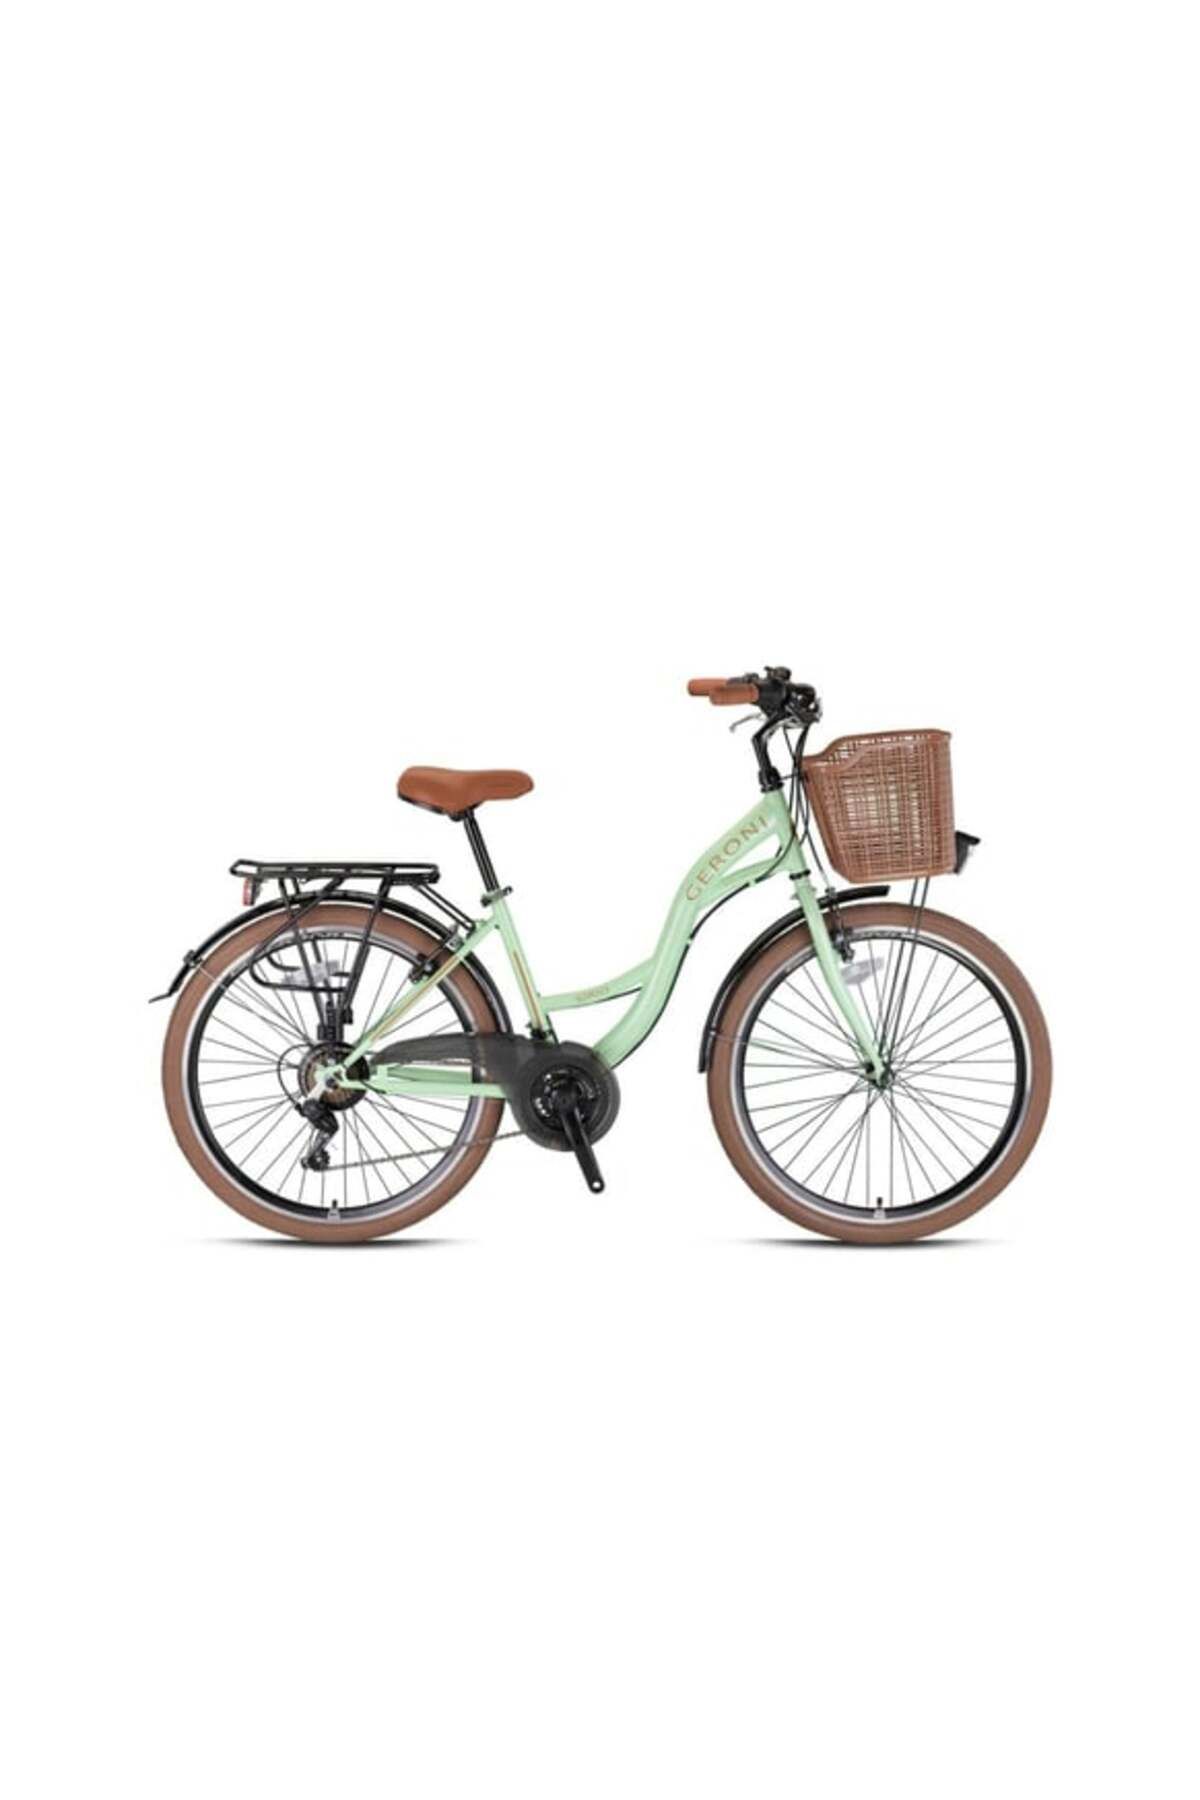 Kron GERONİ  SIRIO 26 JANT City Bike - 21 Vites - V.B. - Mint Yeşili-Kahverengi - Shimano-